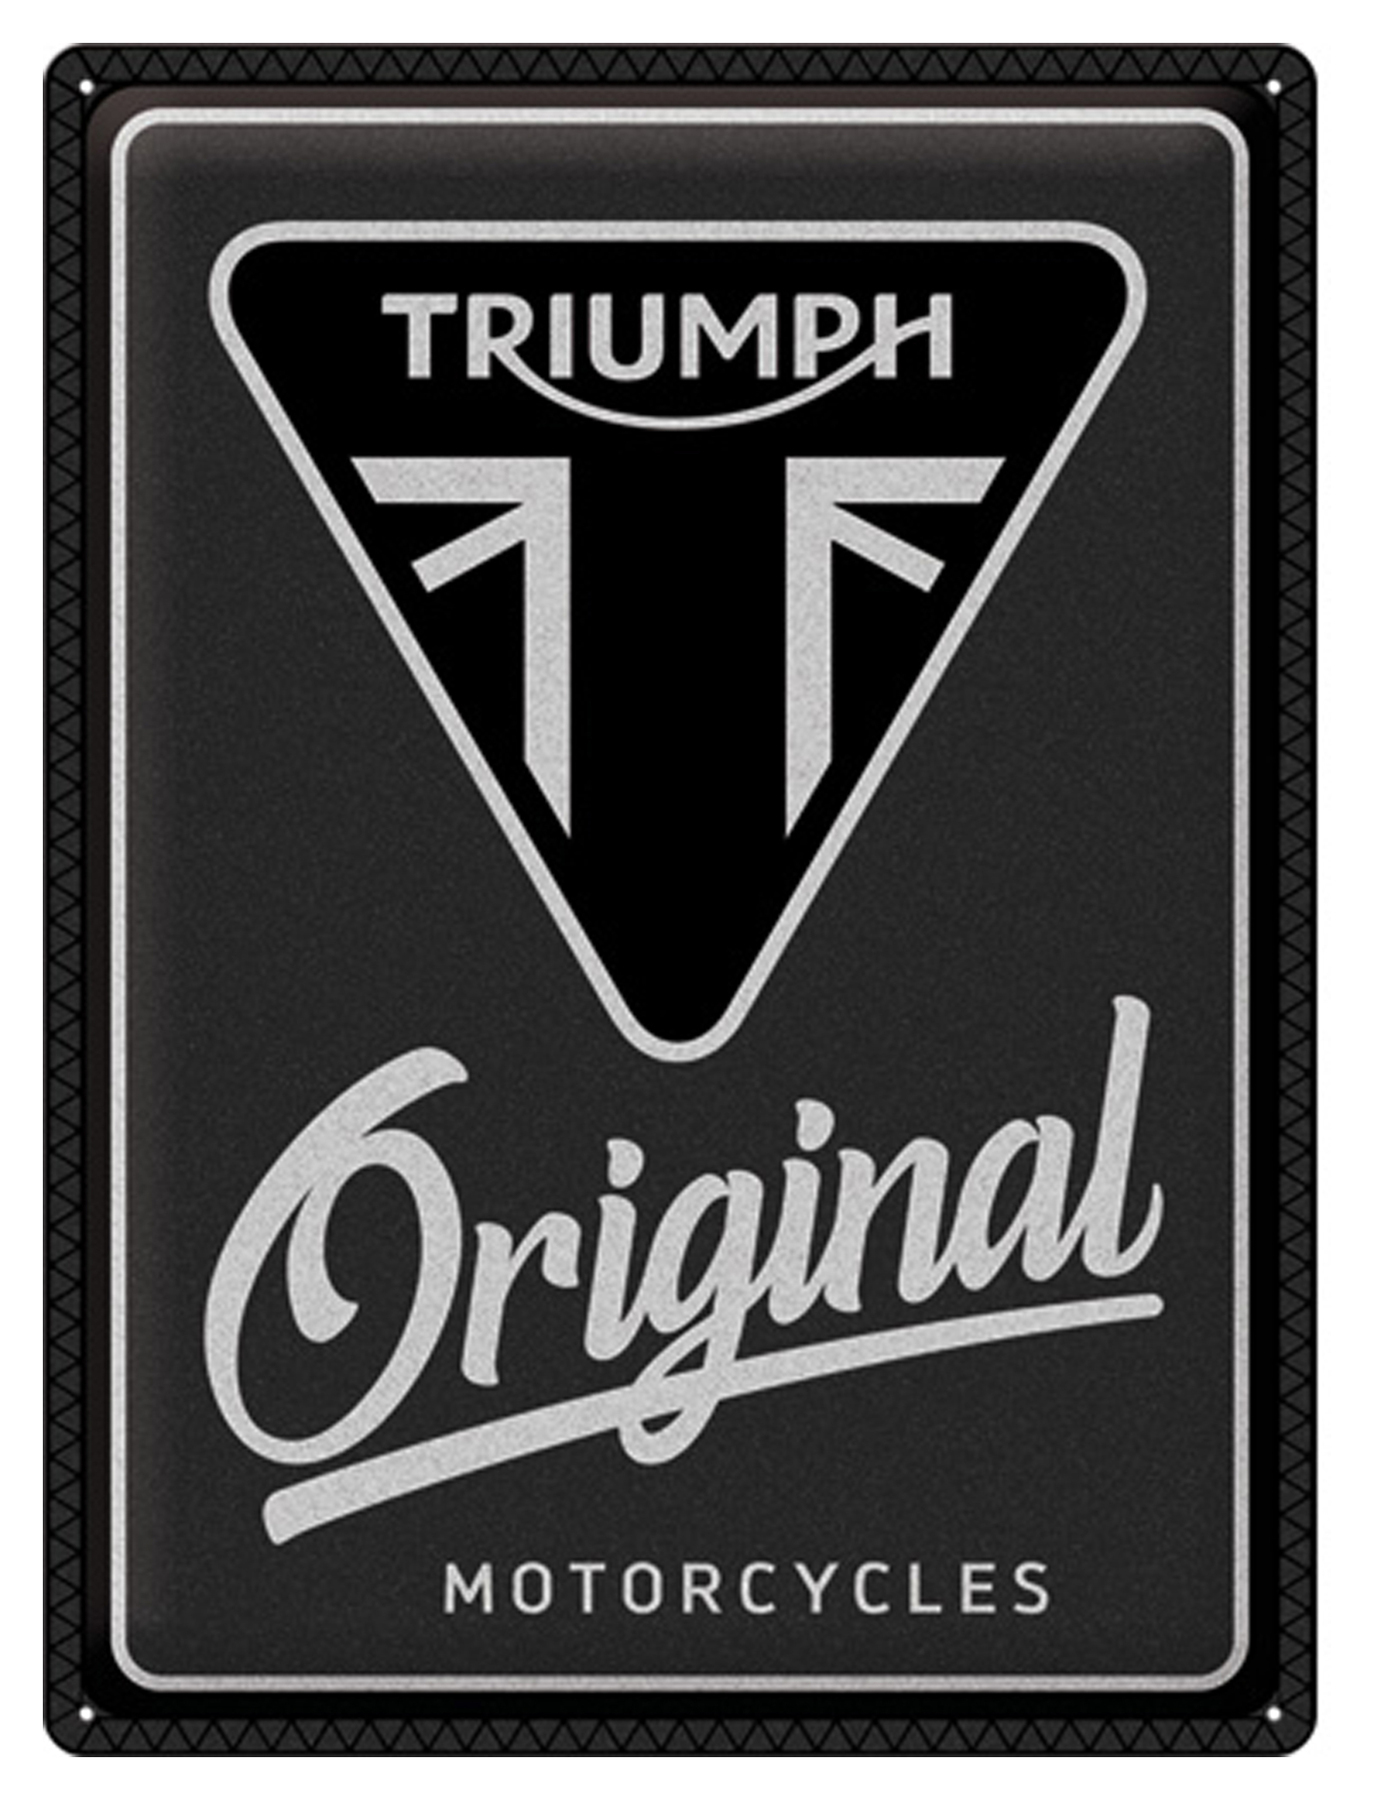 Plaque Triumph original motorcycles